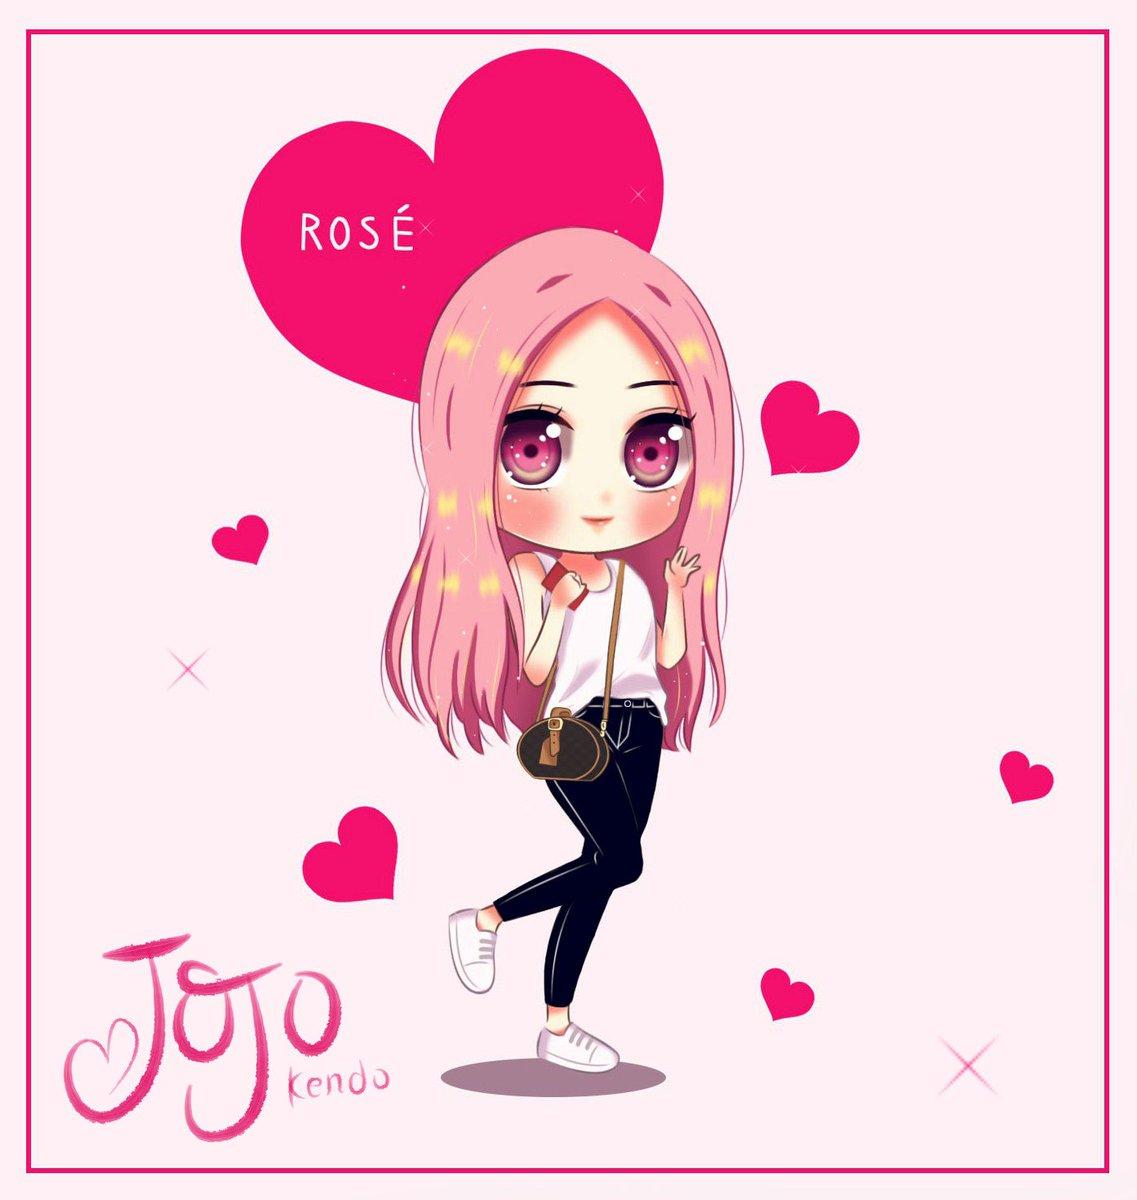 Anime RWBY Ruby Rose Wallpaper